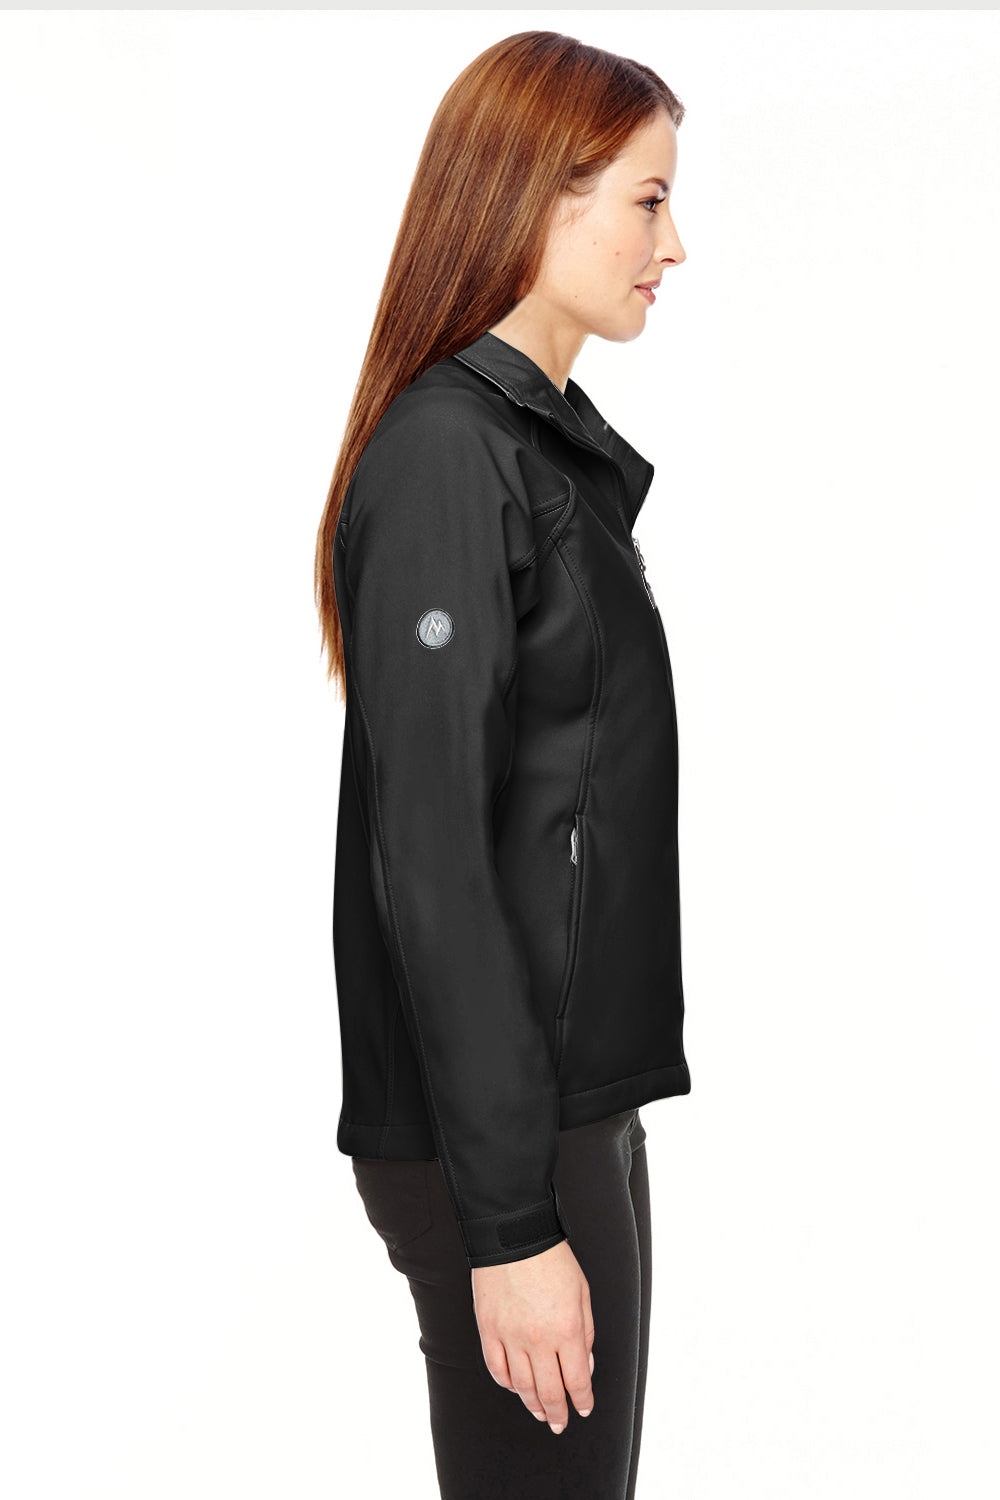 Marmot 85000 Womens Gravity Wind & Water Resistant Full Zip Jacket Black Side